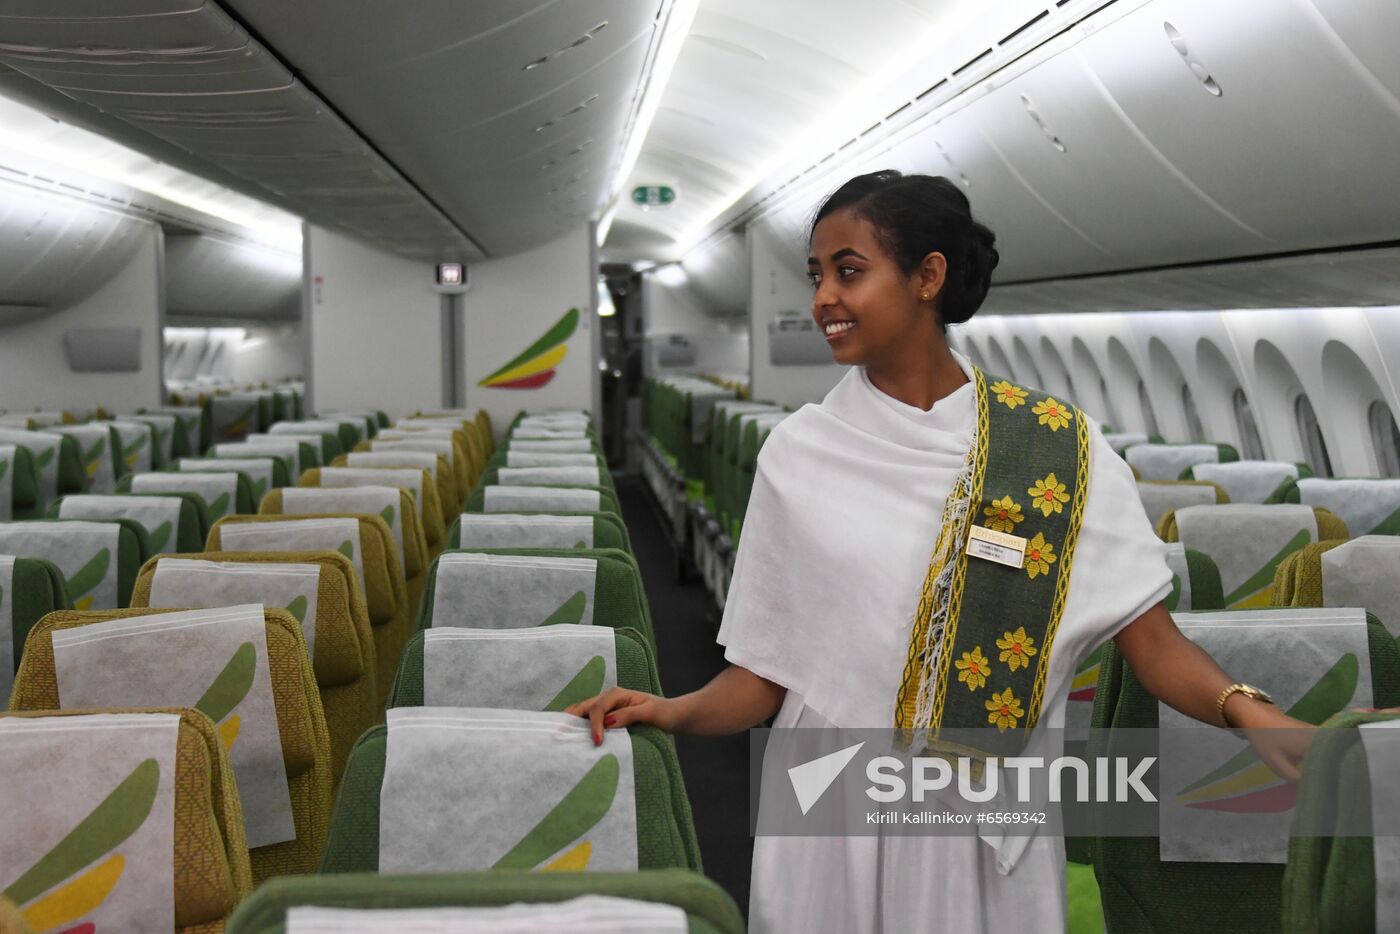 Russia Ethiopian Airlines Plane Presentation